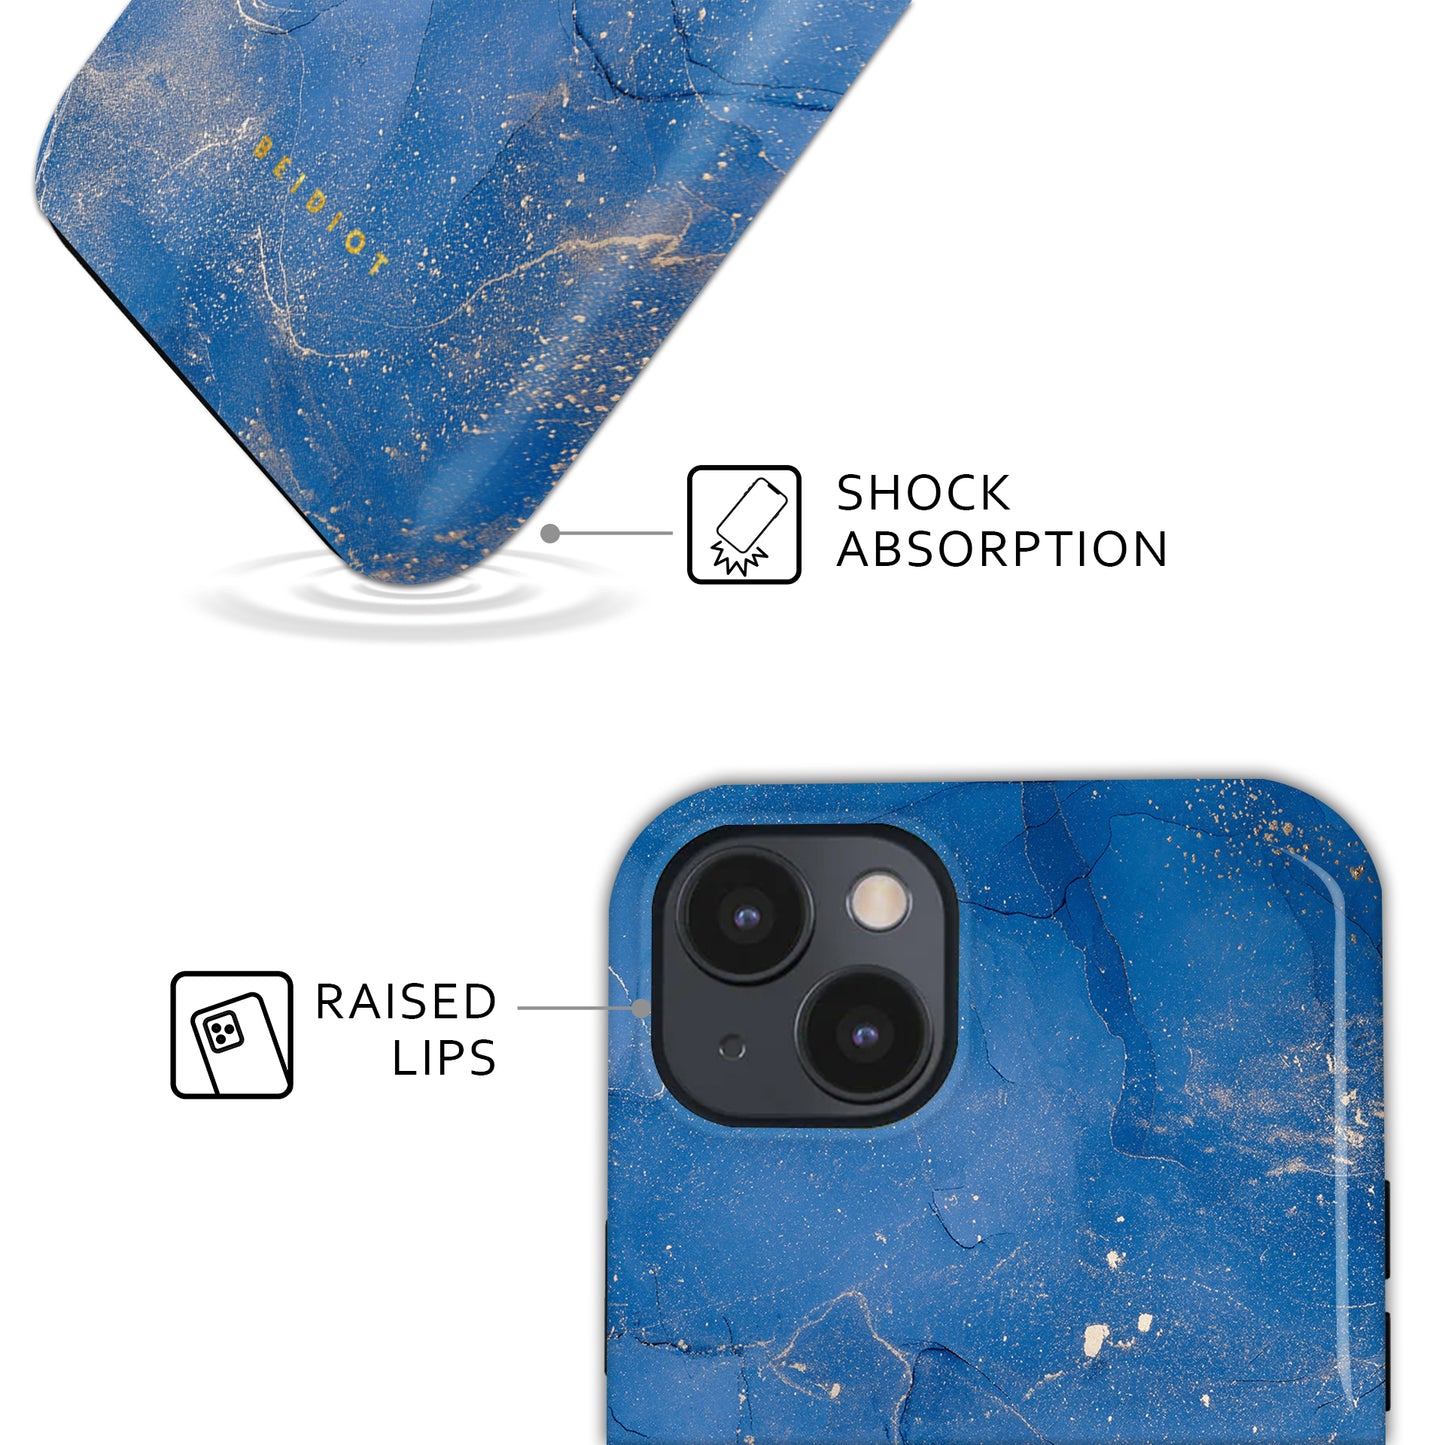 Blue Nebula Spark iPhone Case